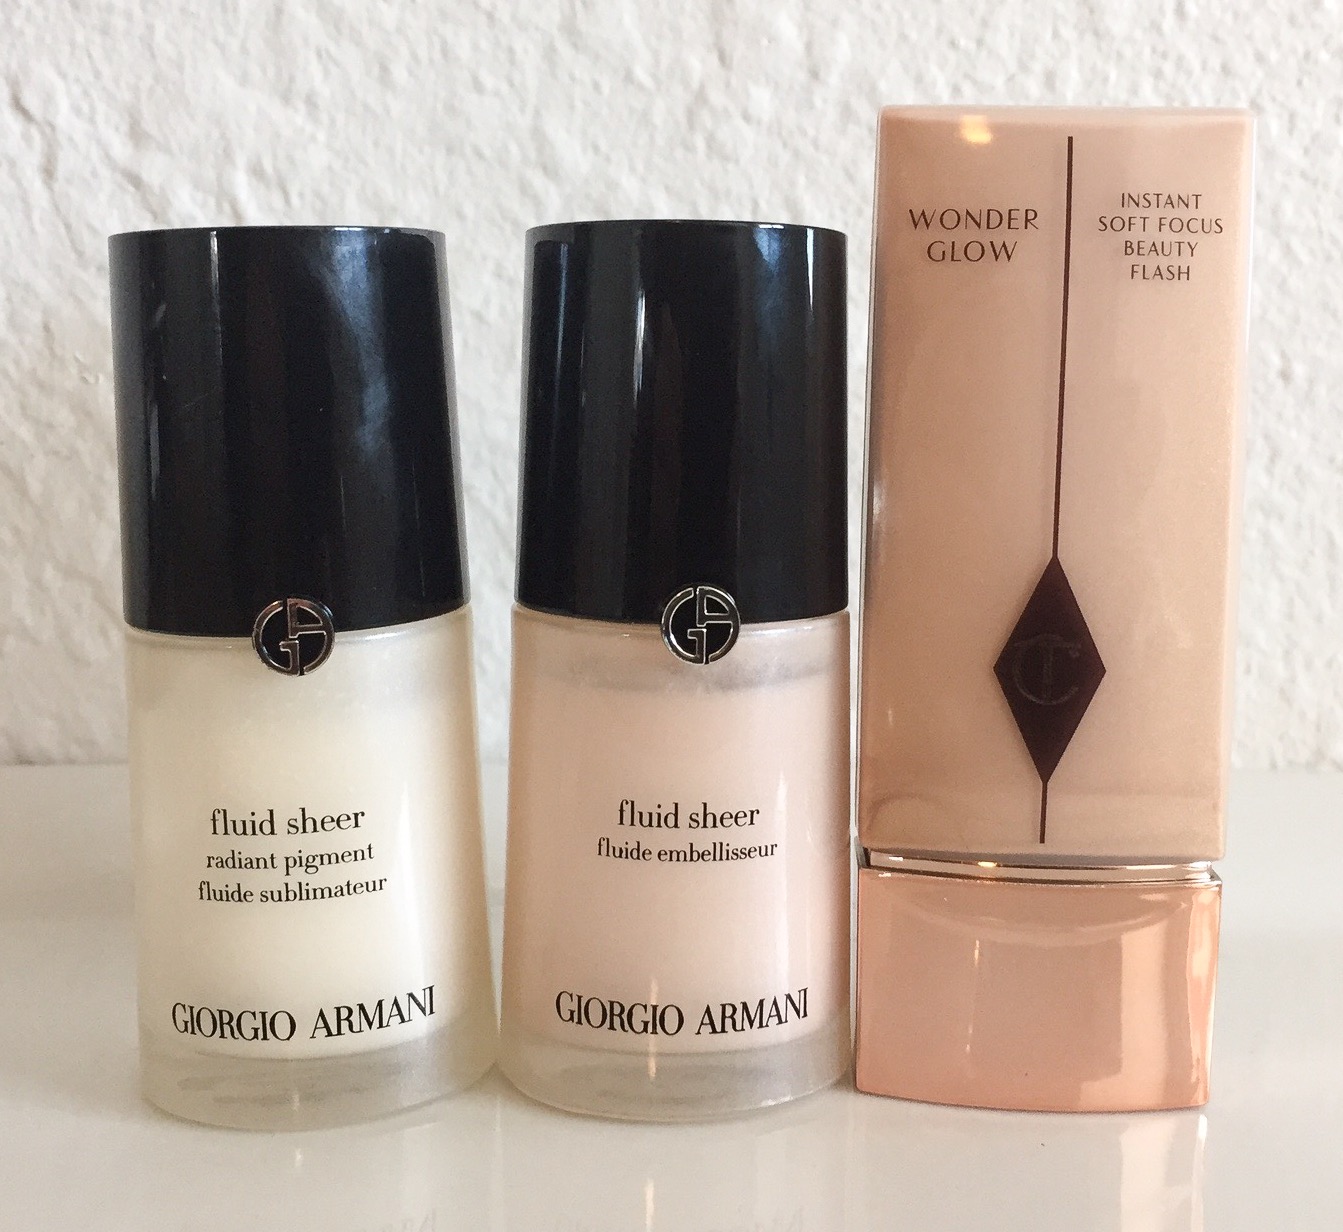 Giorgio Armani Beauty Foundation Comparisons by Fab Over 40